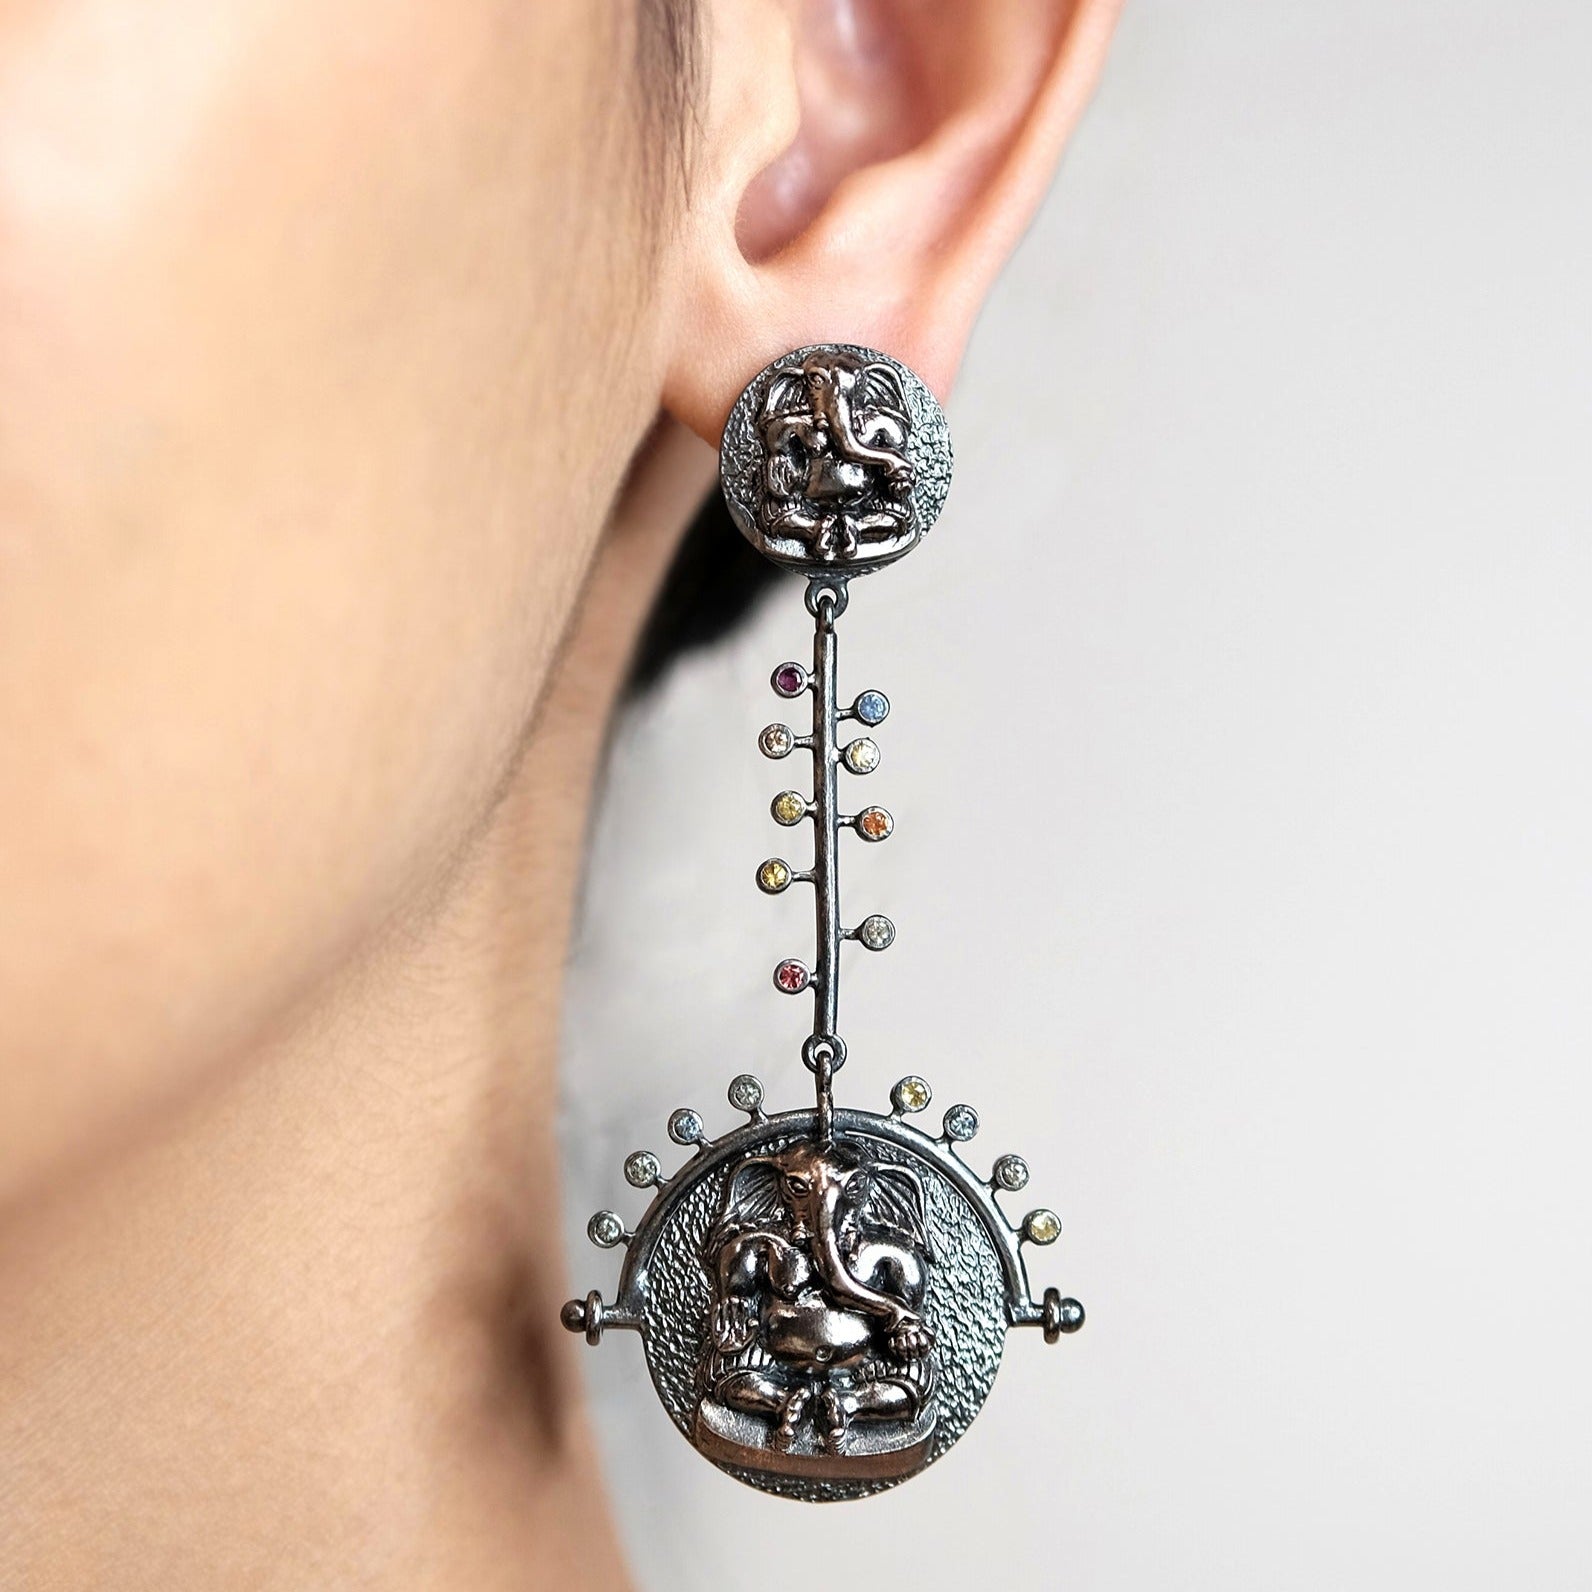 The Madstone Ganesha pendant earrings